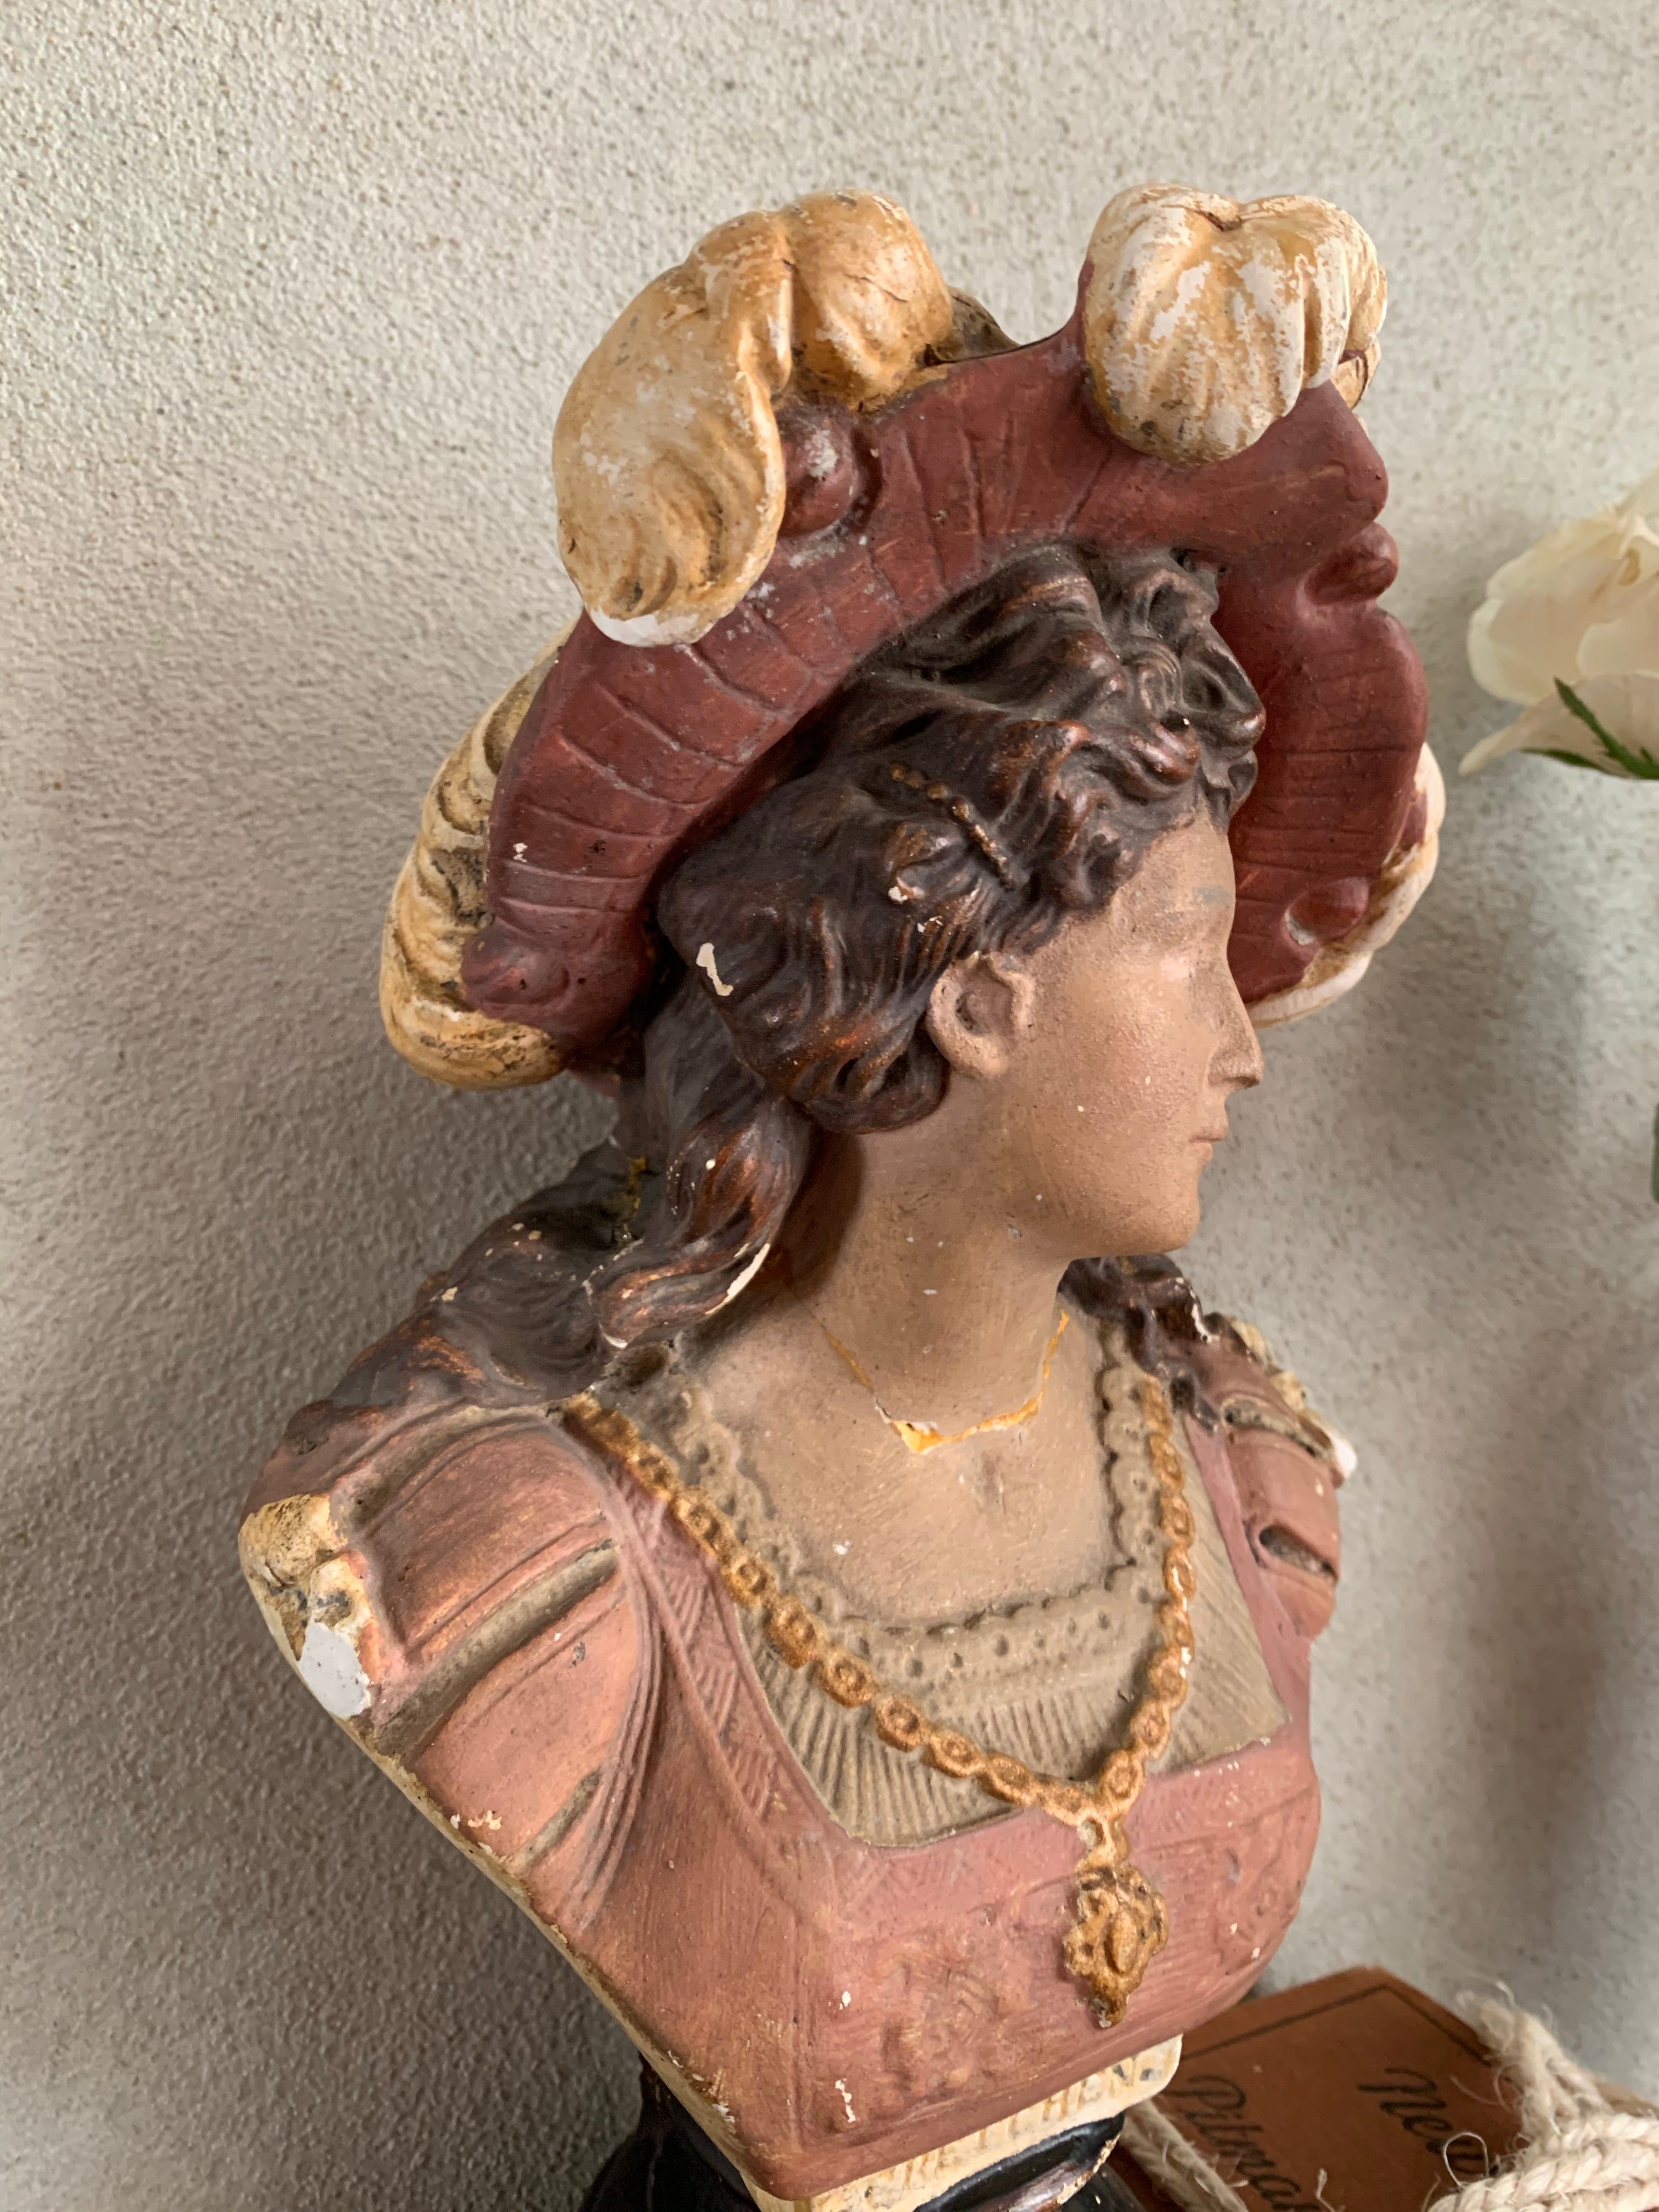 Antique Plaster Bust of "Gretchen"